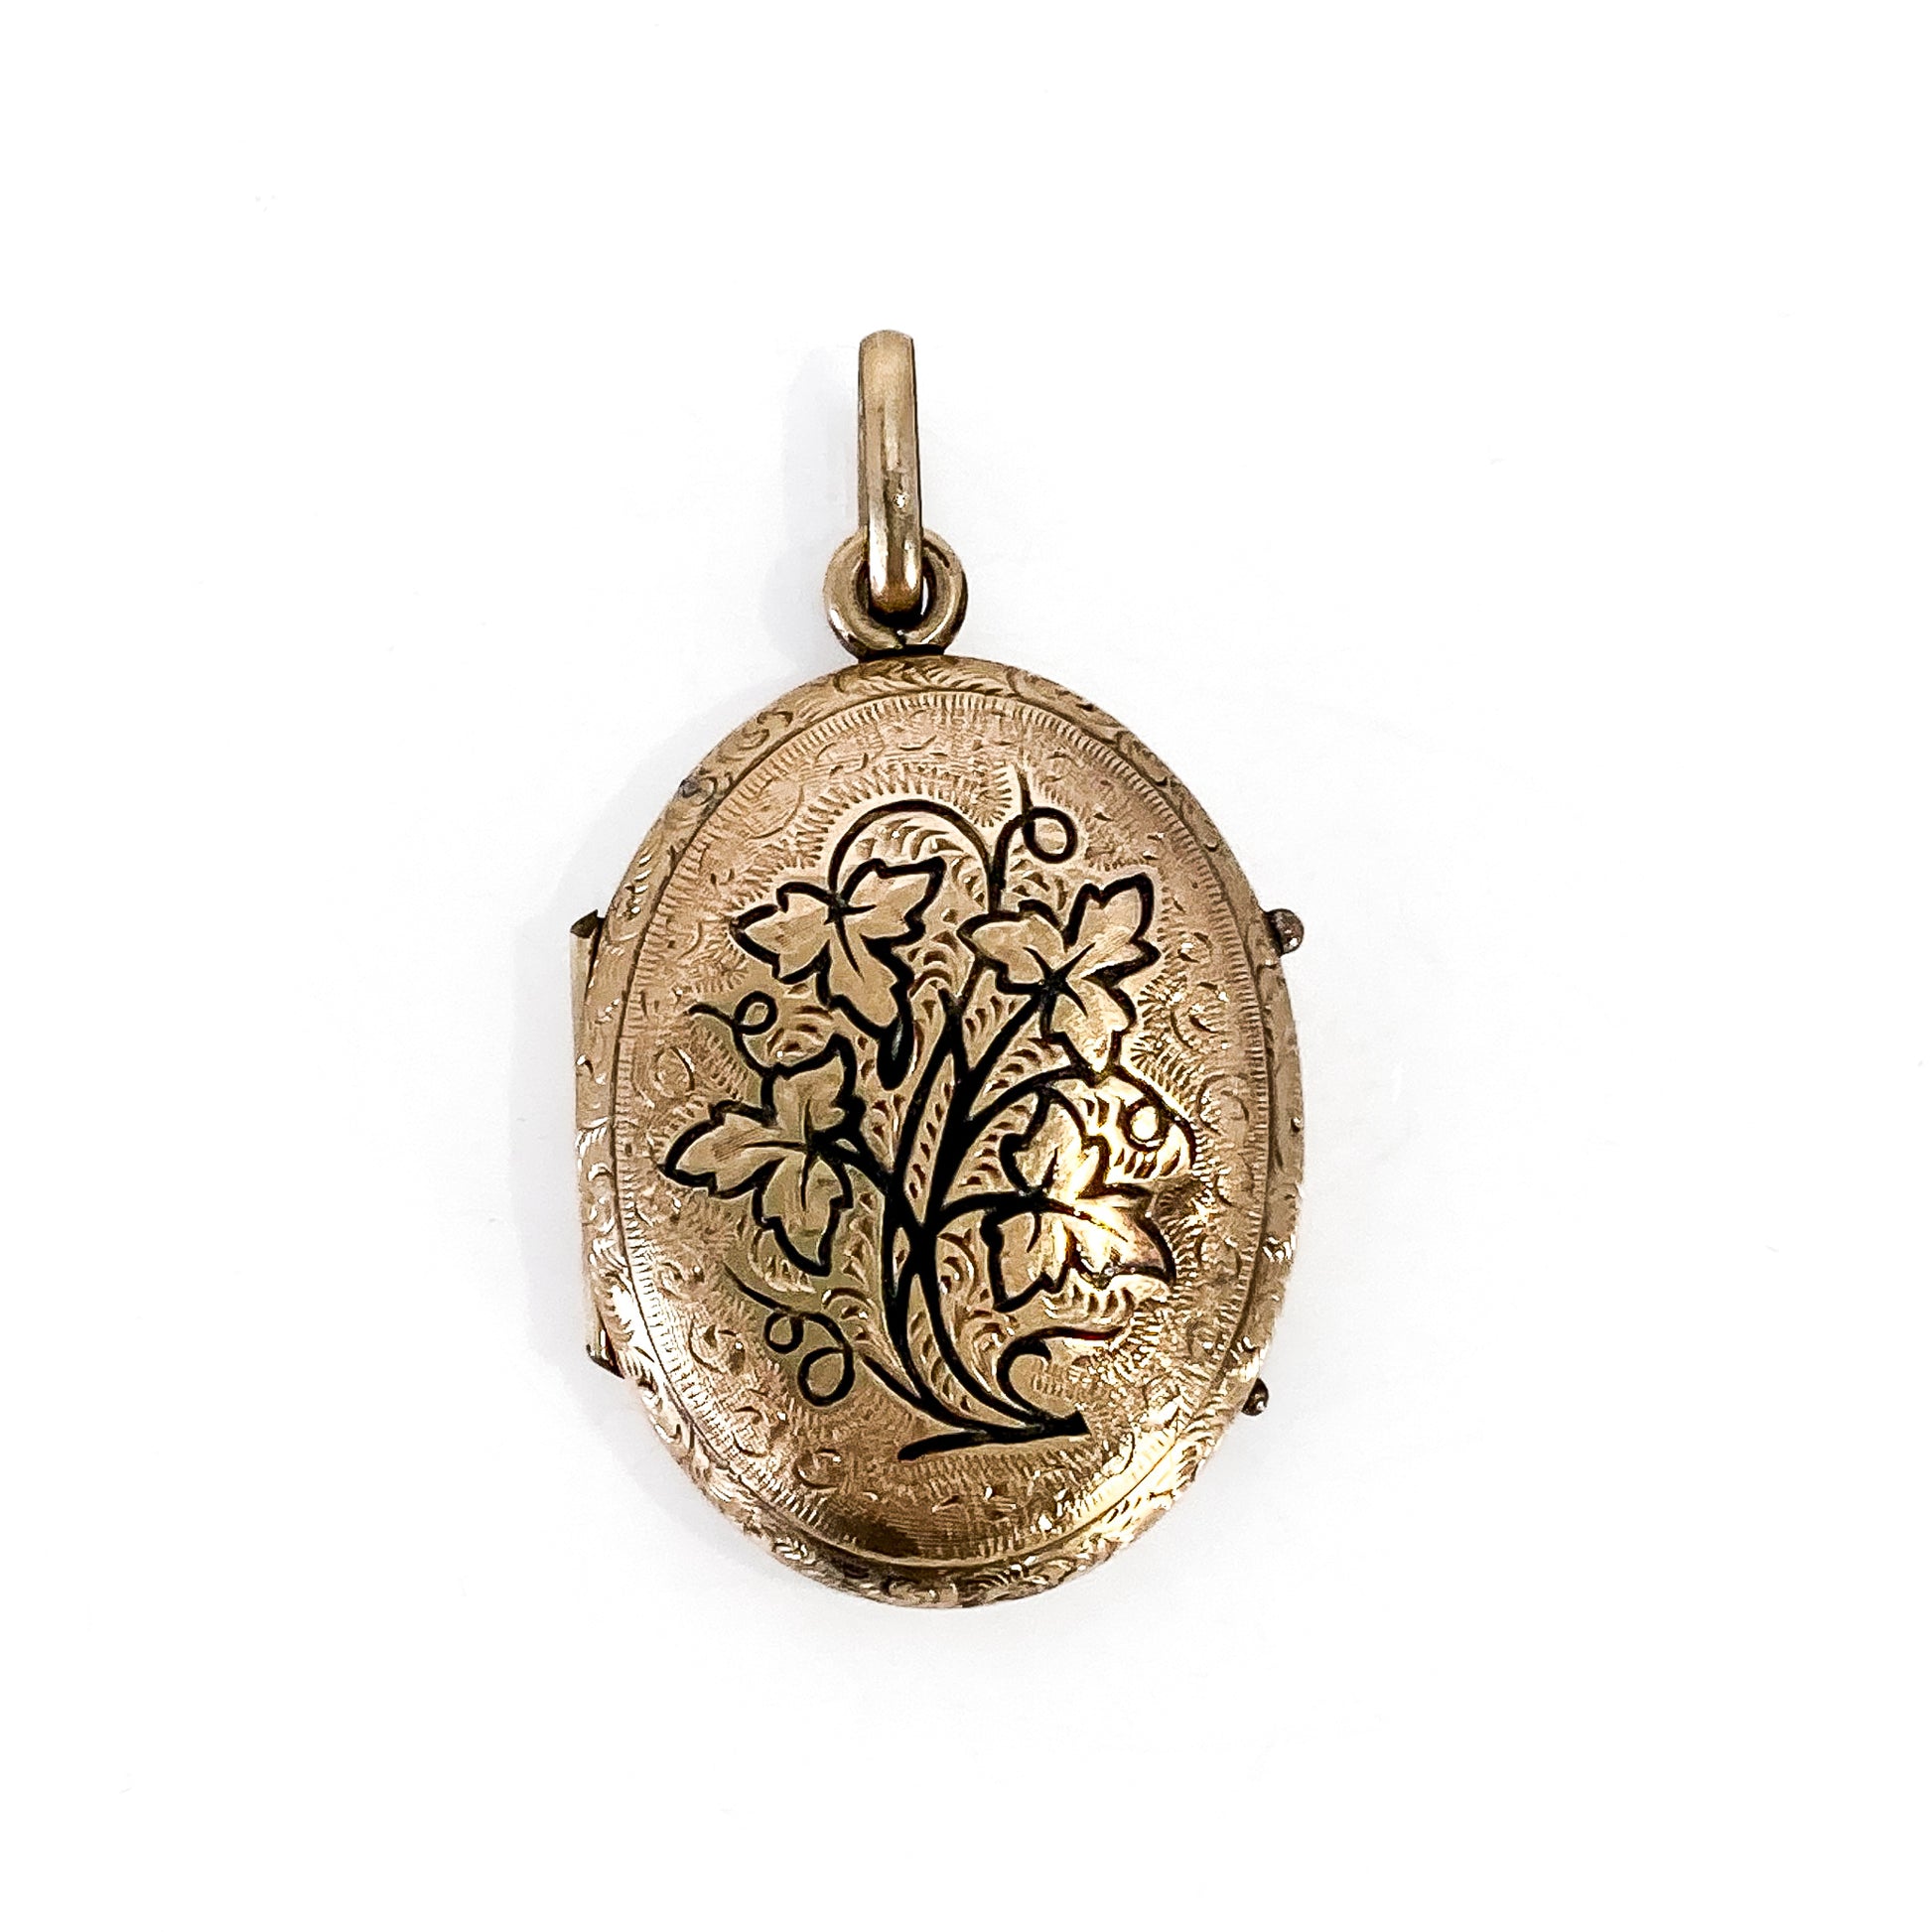 Antique Gold Filled Oval Floral Engraved Mourning Hair Locket Pendant 2